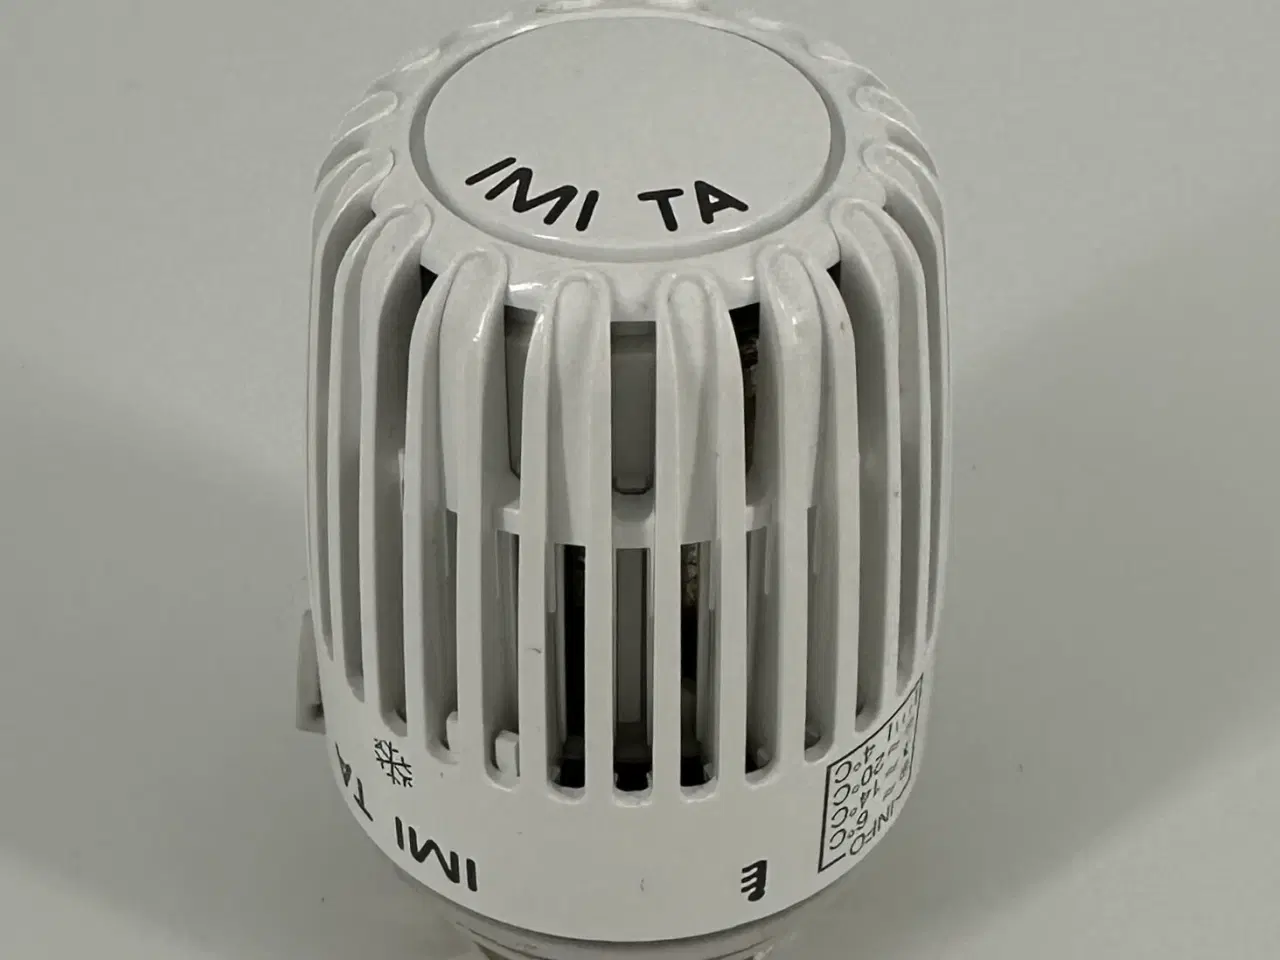 Billede 2 - Imi ta radiator termostat, hvid